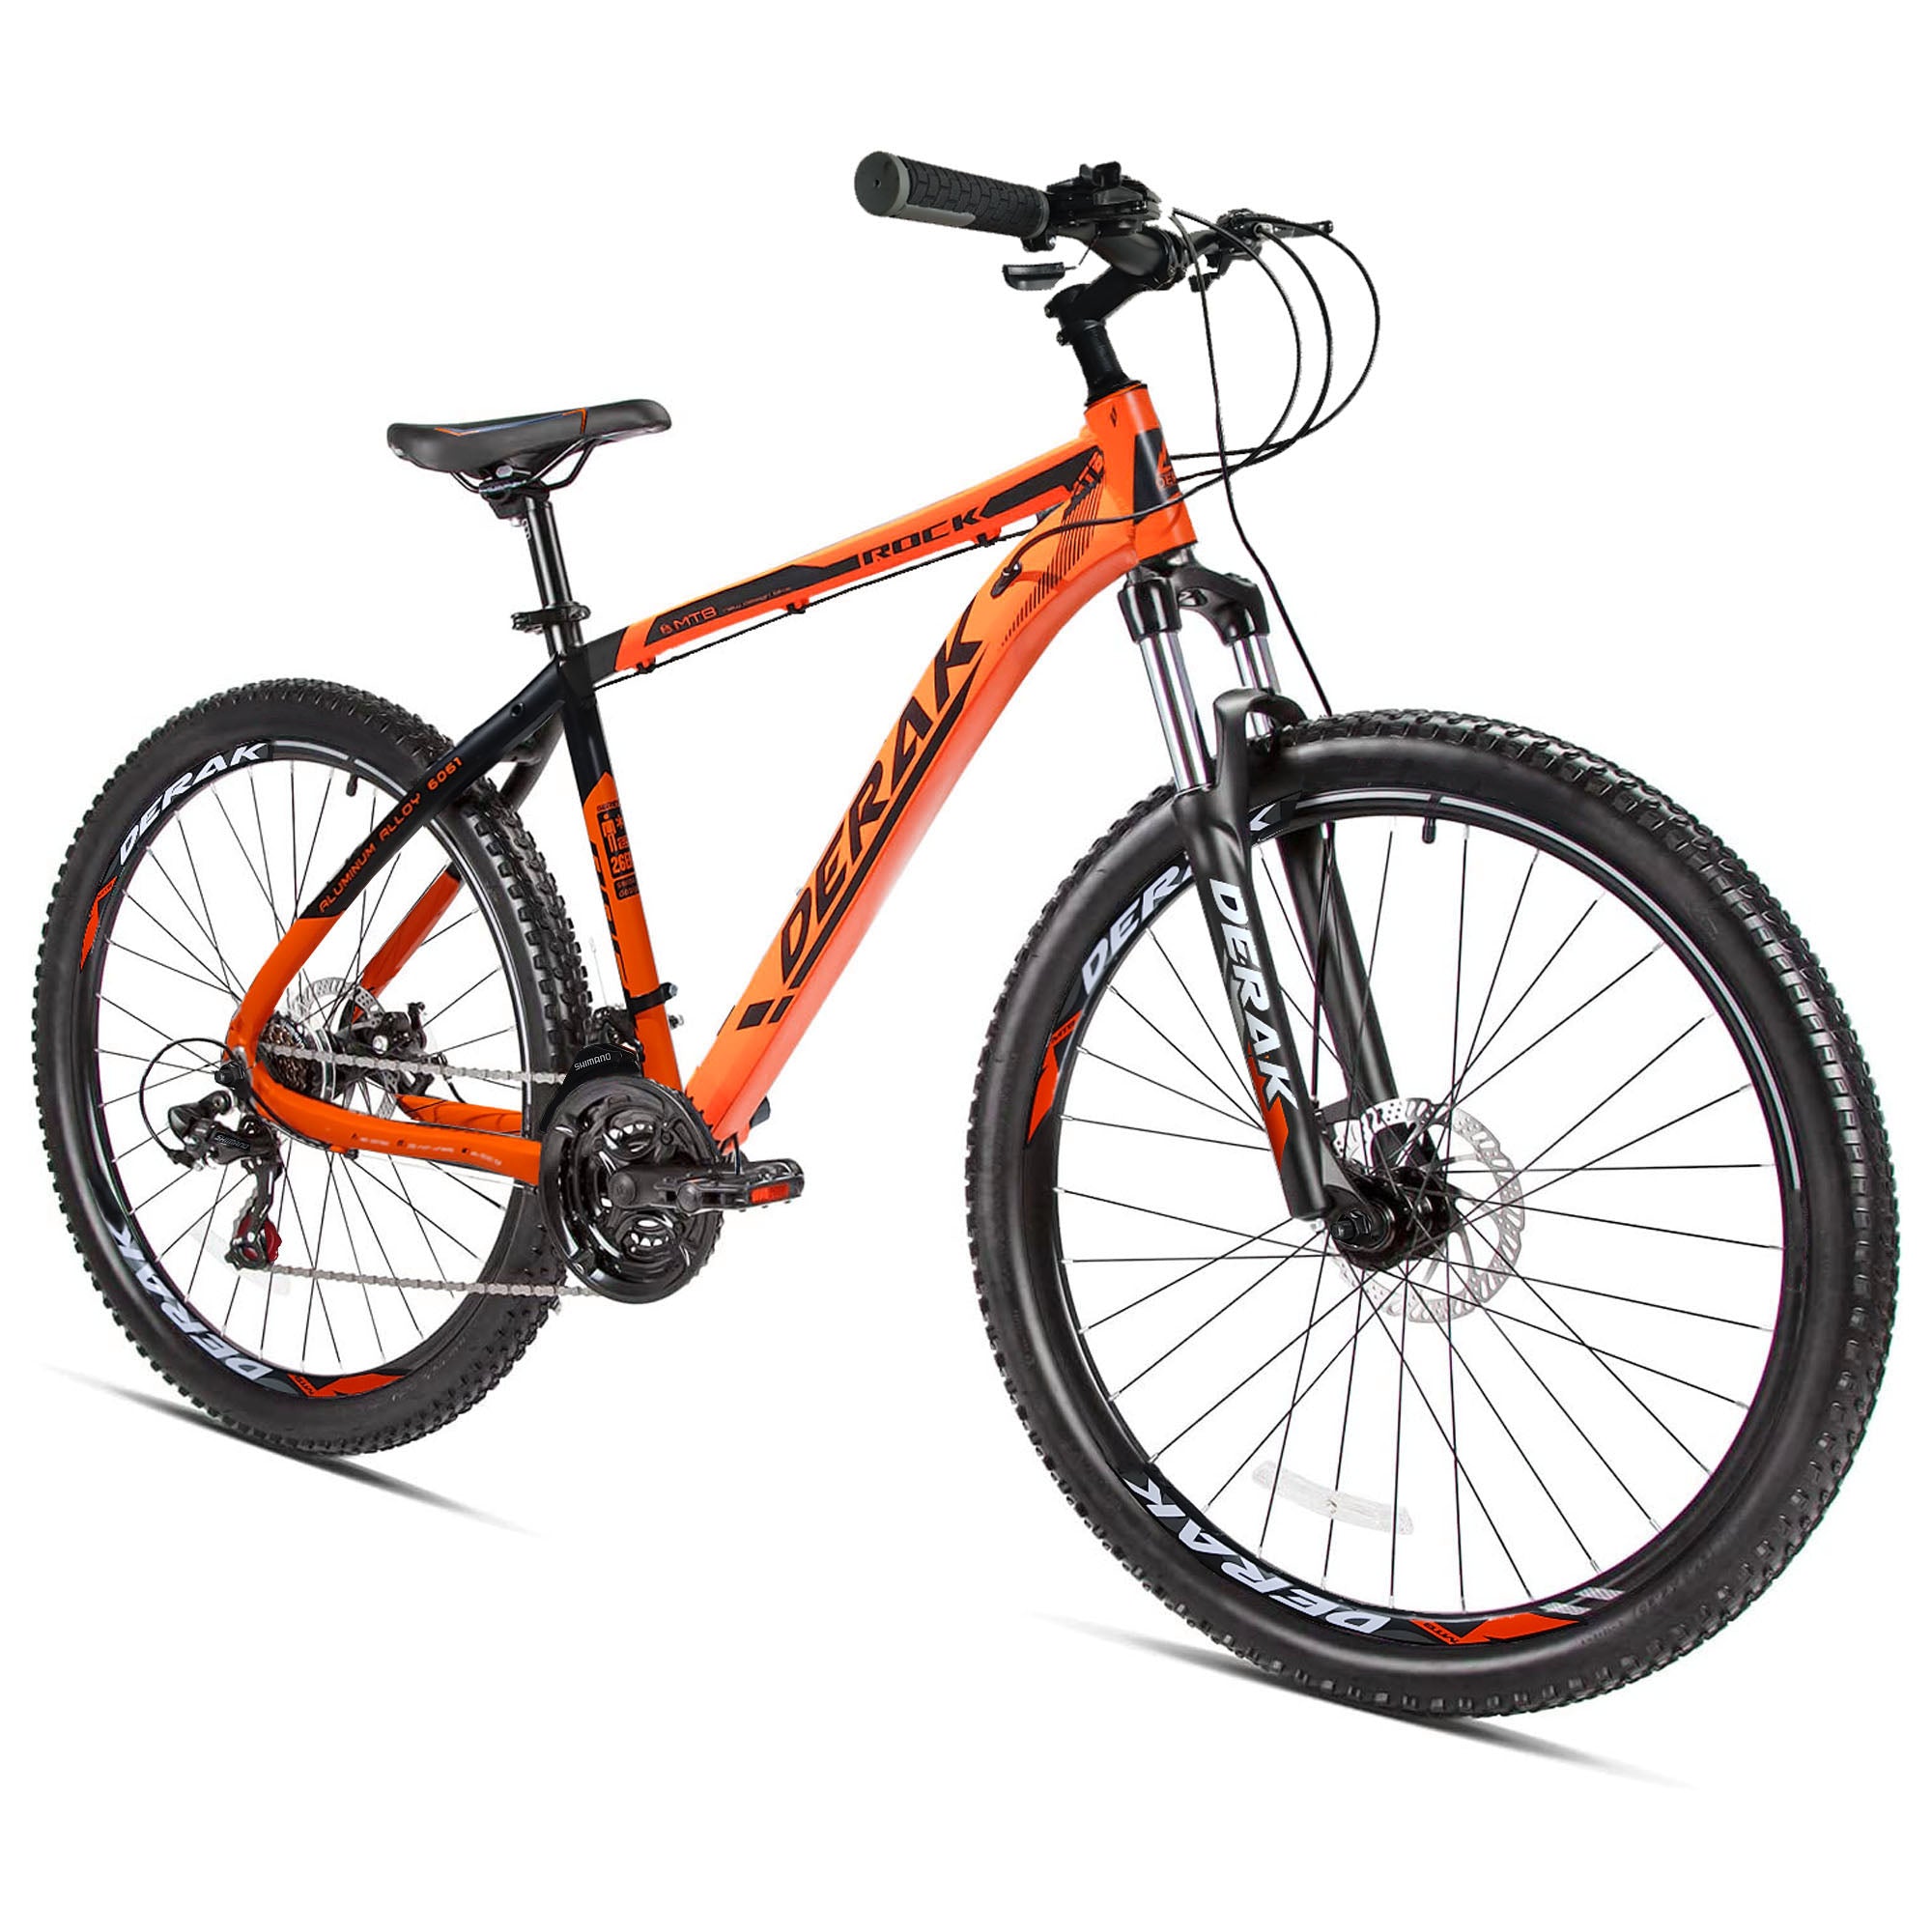 Rock Aluminum Bicycle Adults 26 Inch Orange (100% Assembled)